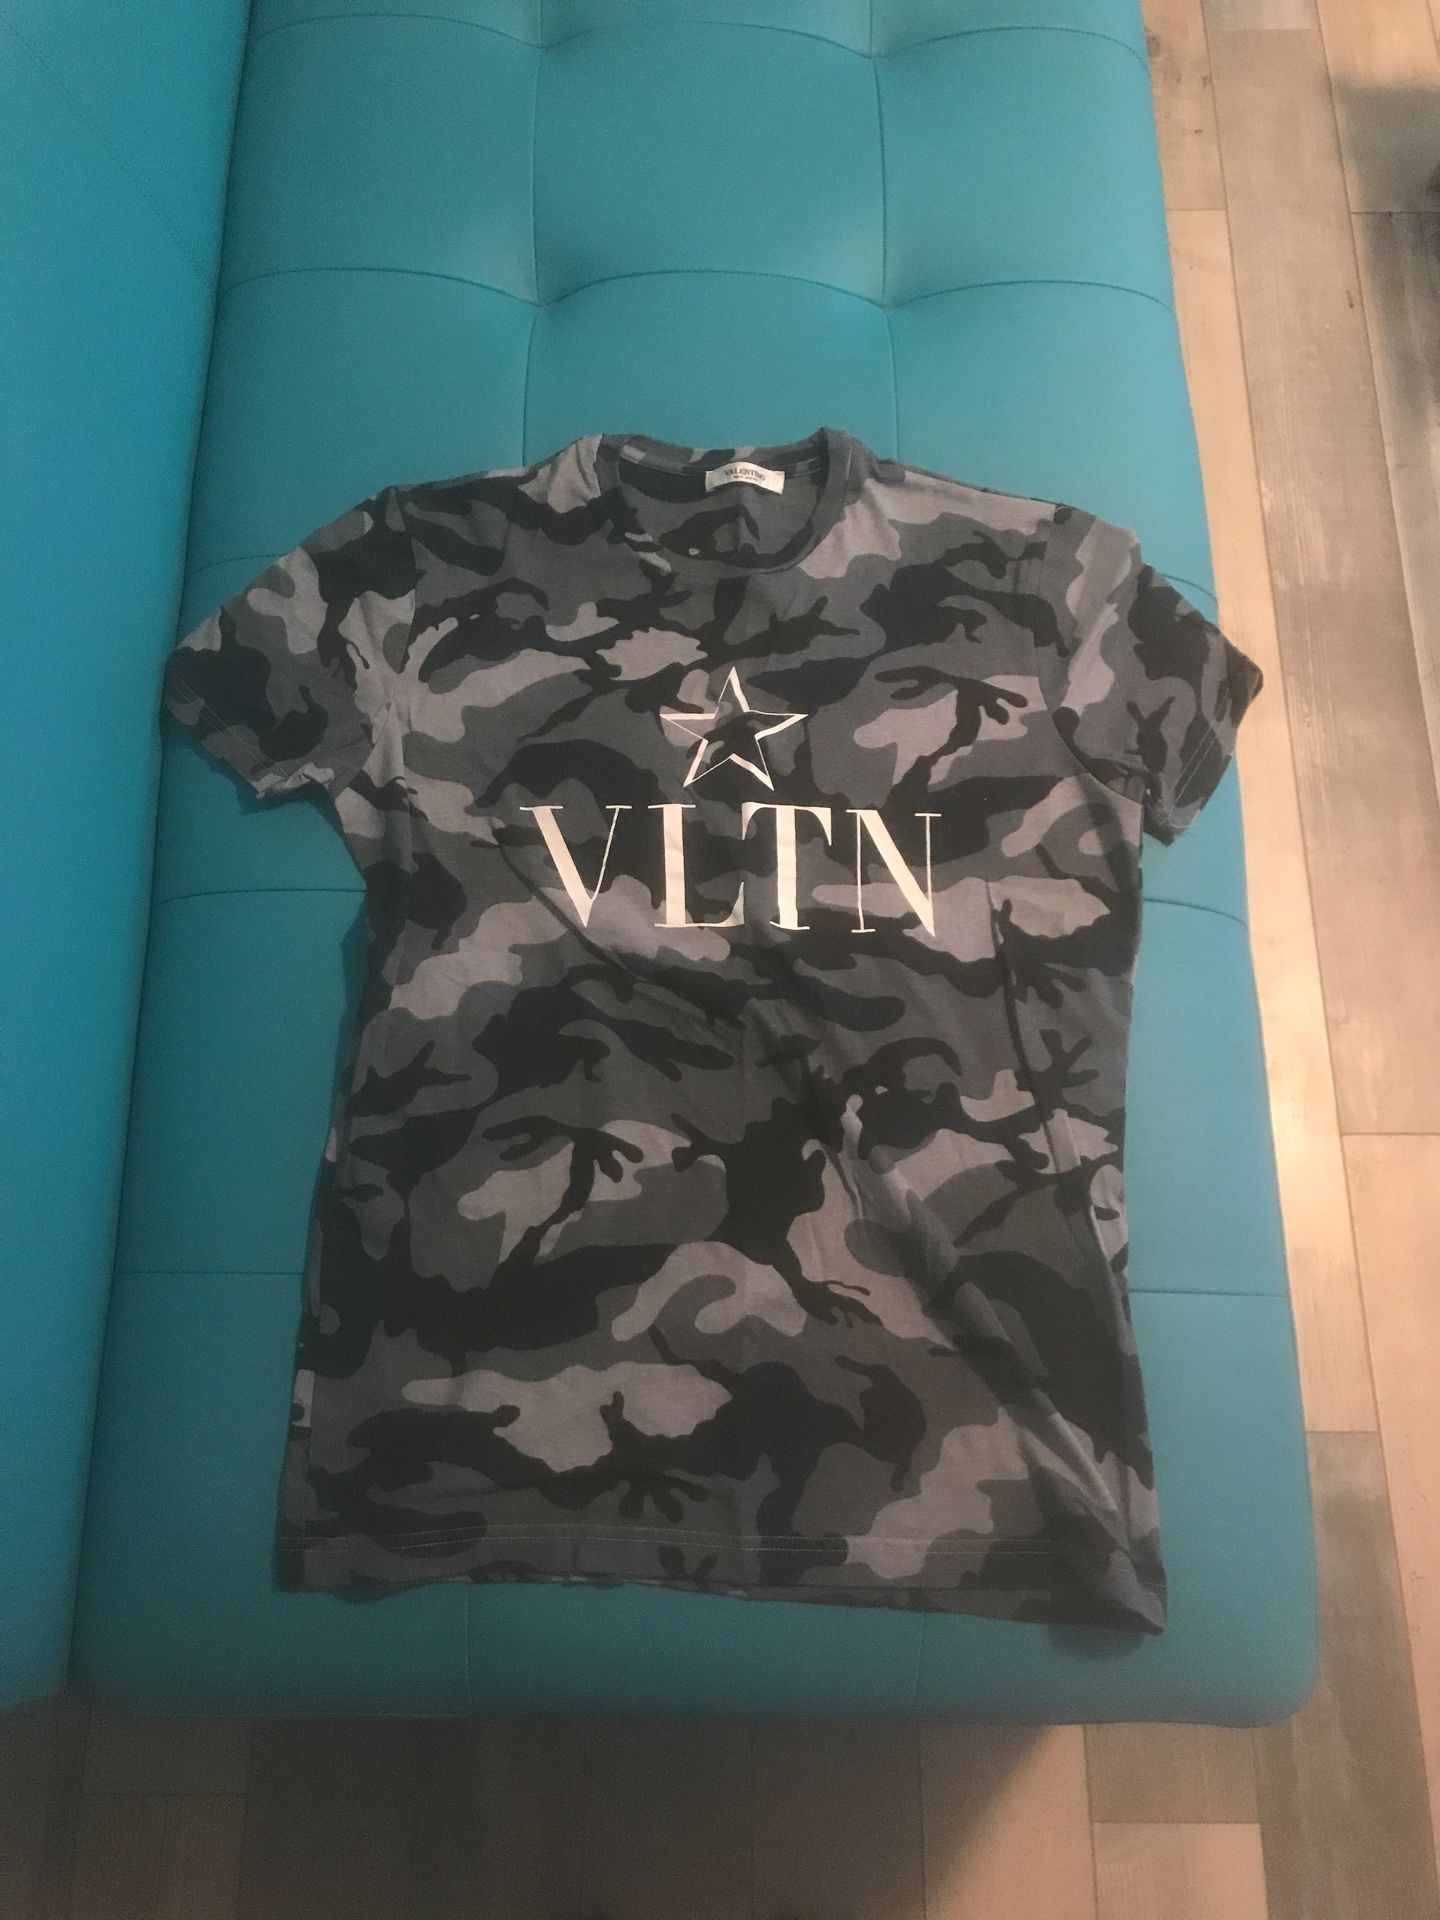 Valentino Camo shirt size M